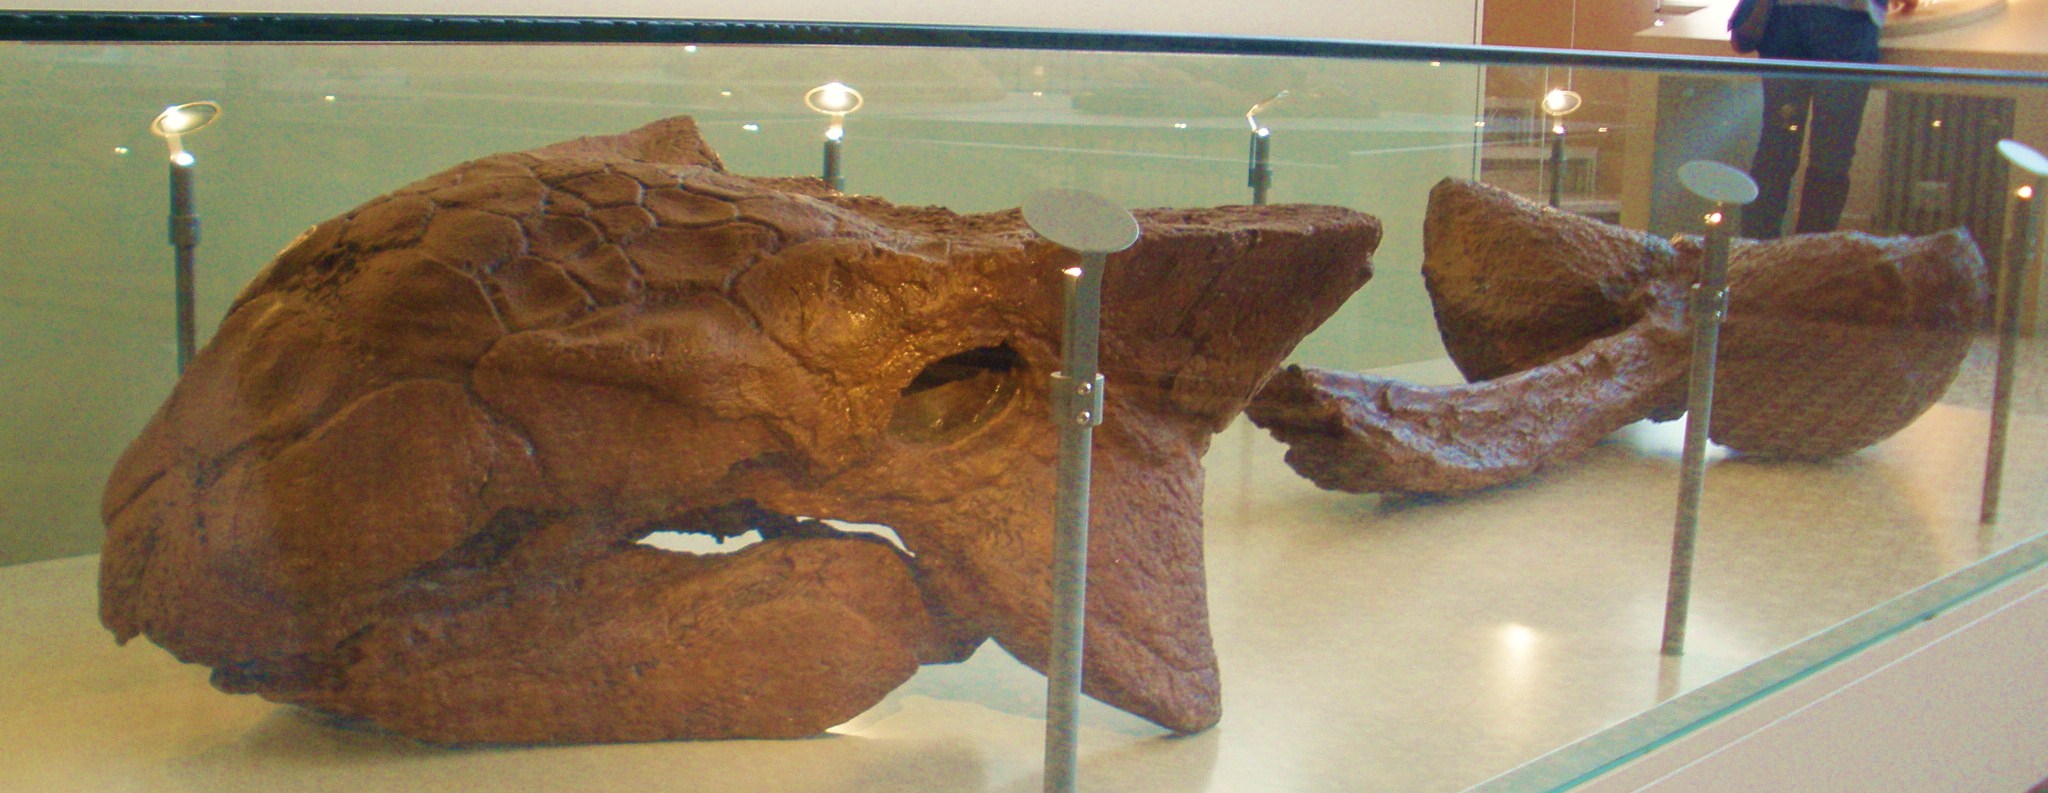 ankylosaur